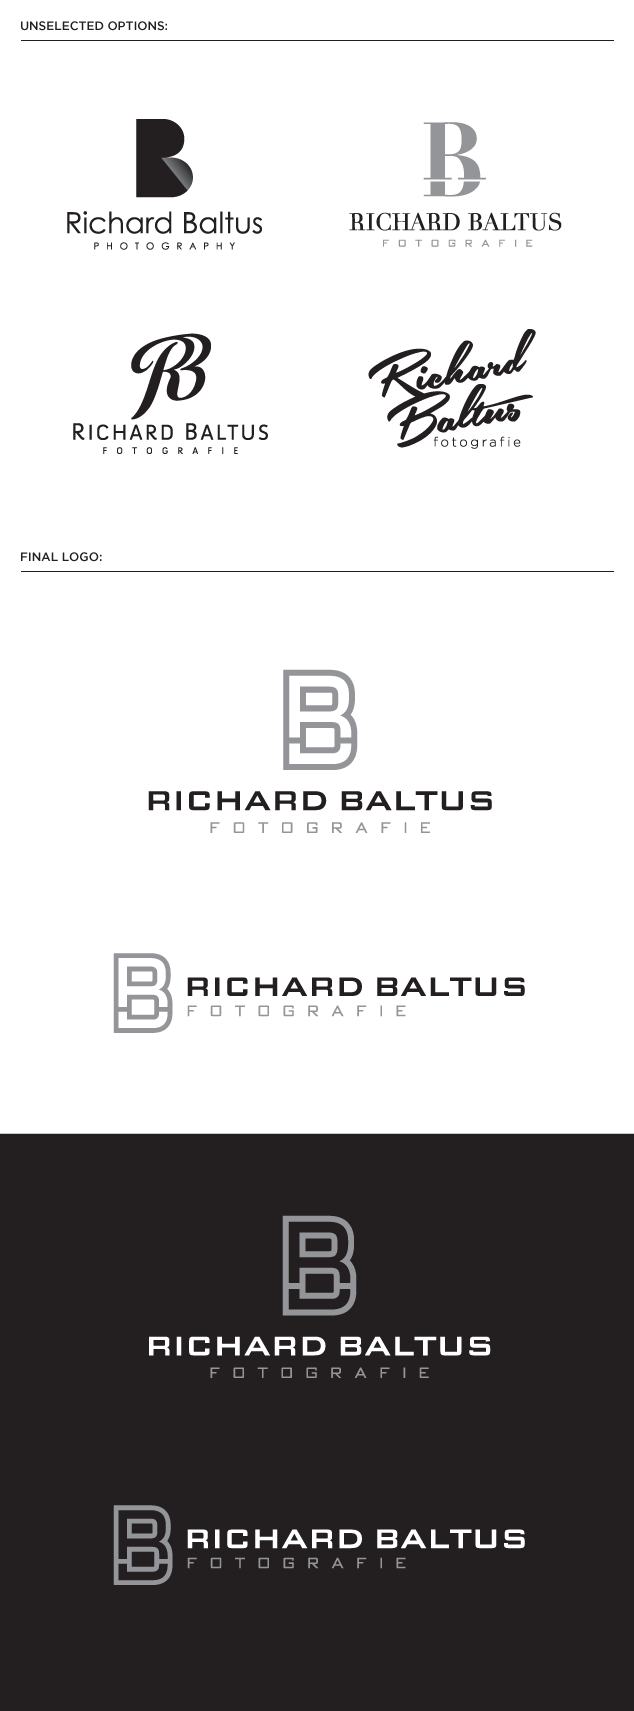 photographers logo design for Richard Baltus fotographie